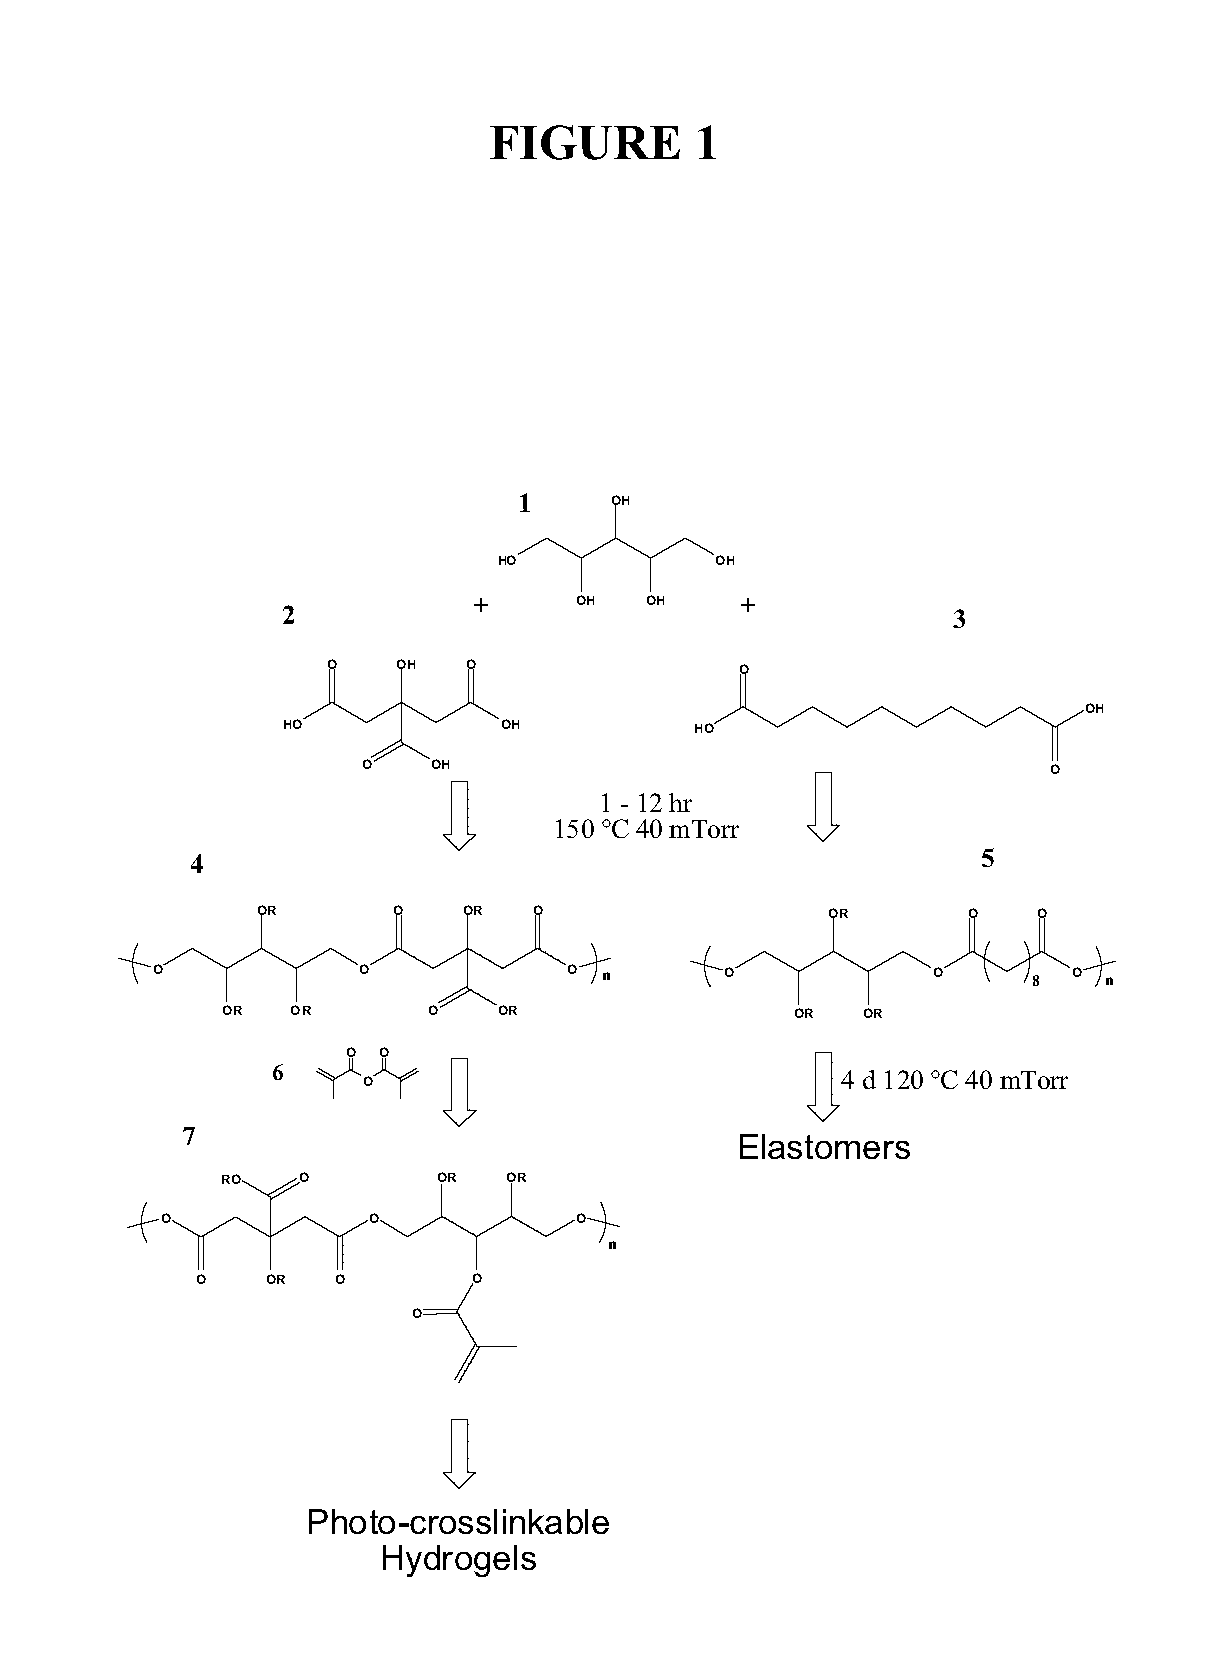 Polyol-based polymers